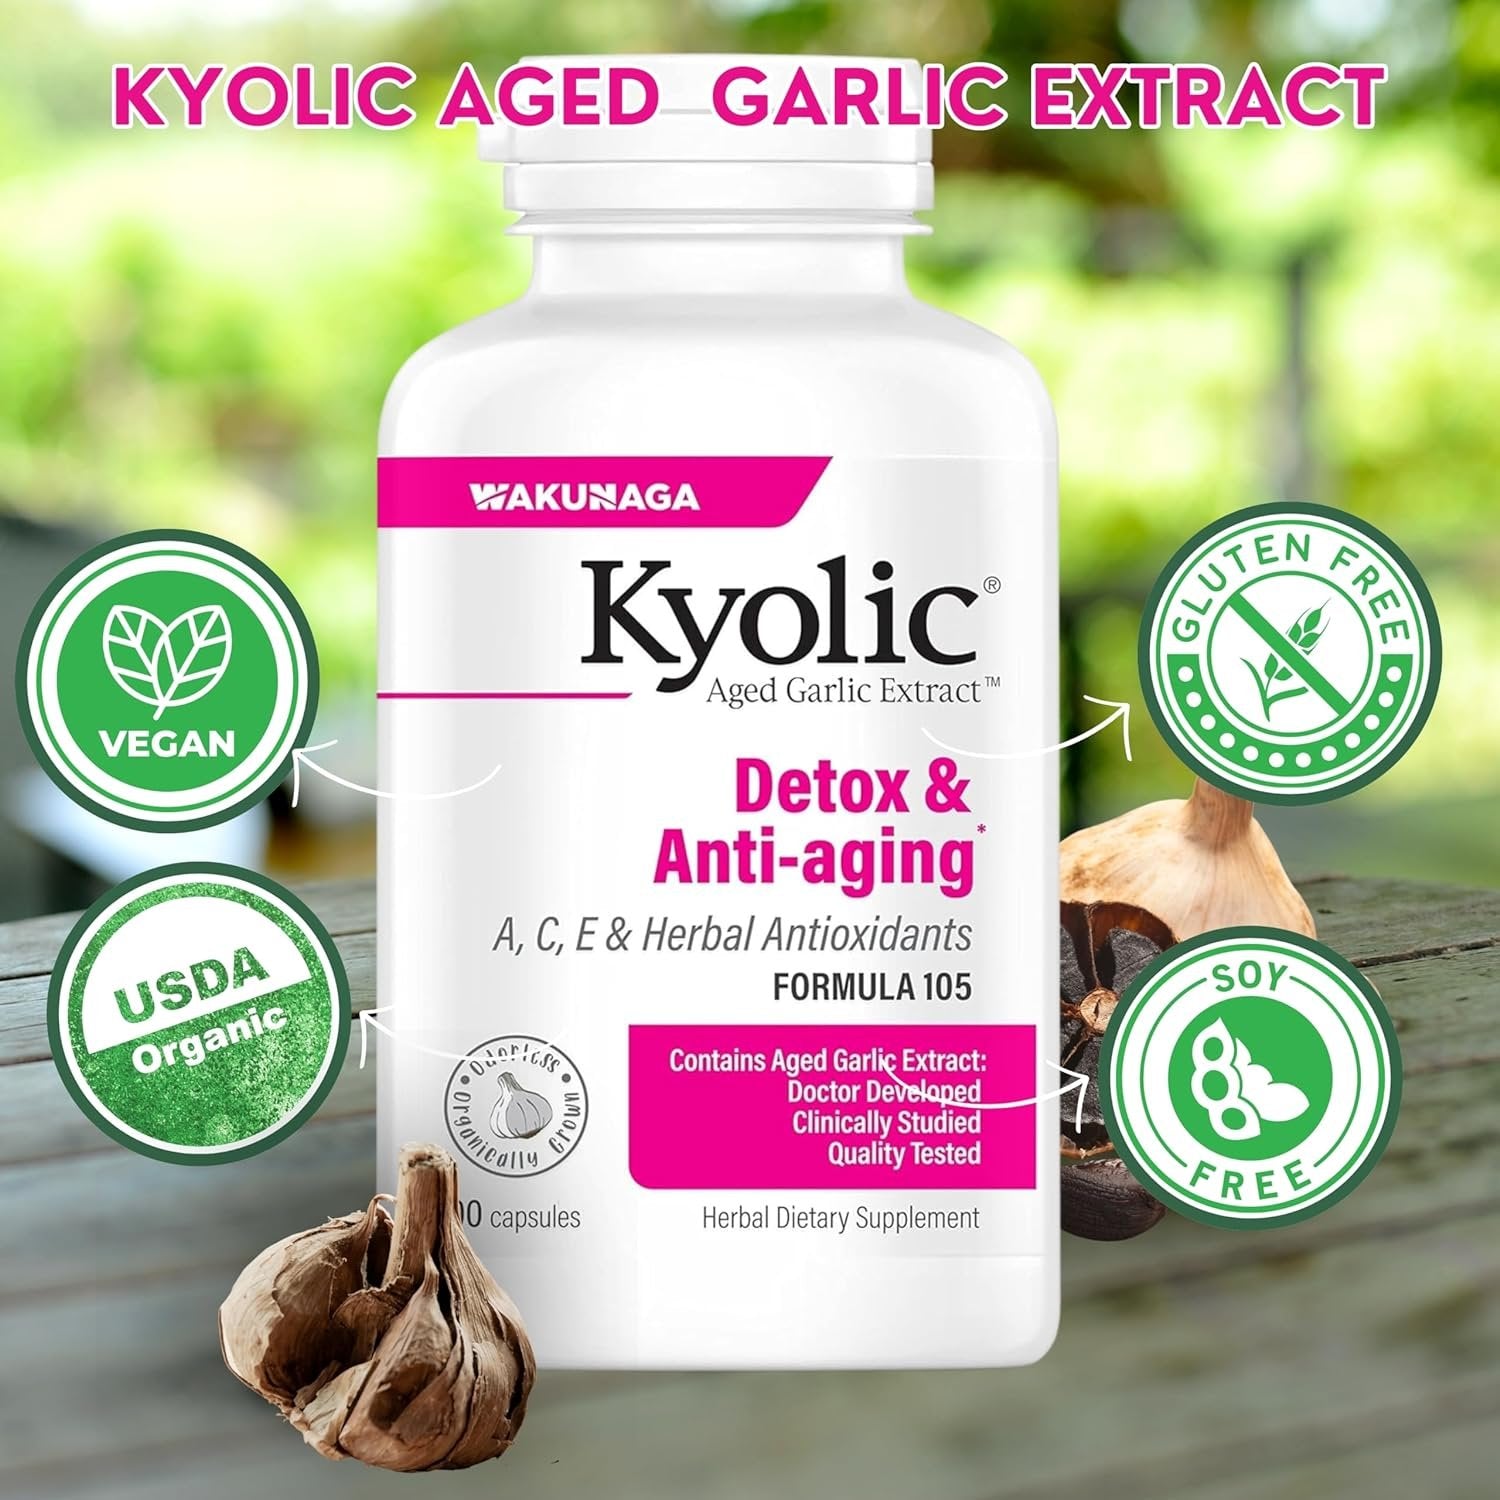 Kyolic Aged Garlic Extract Detox & Anti-Aging Formula 105 - Organic Aged Garlic Extract Odorless - 200 Capsules - with Multi-Purpose Key Chain